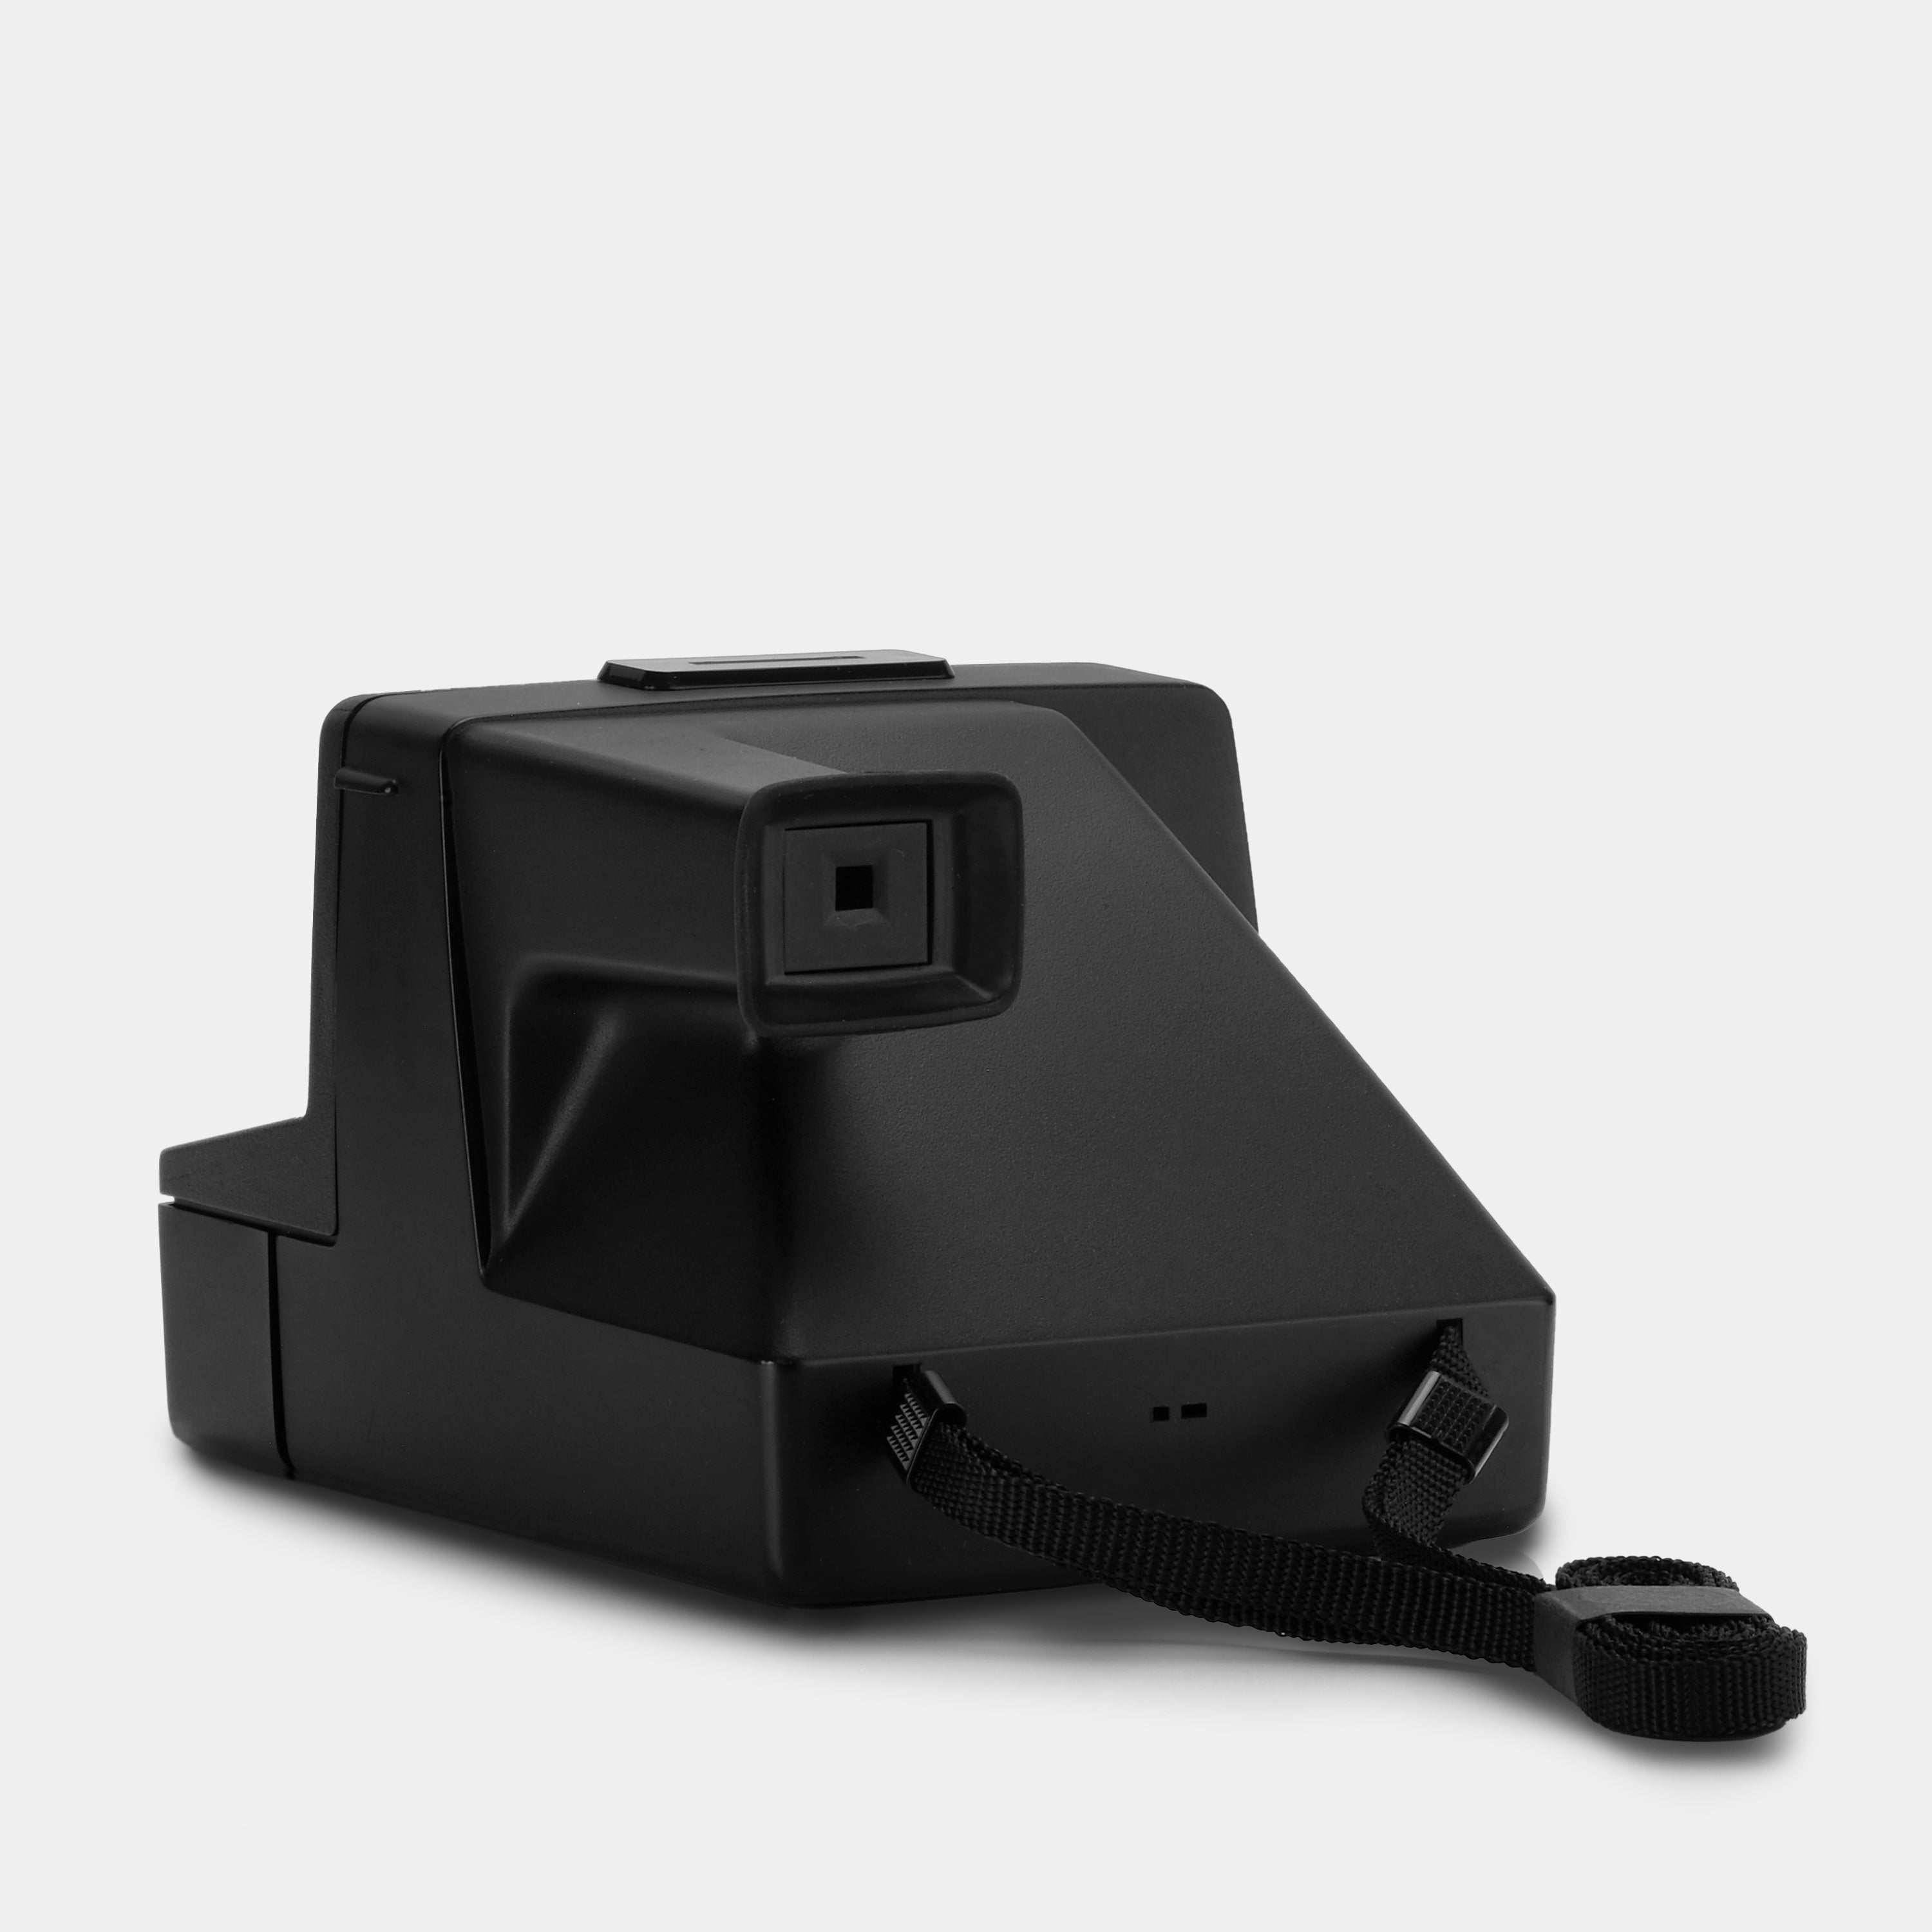 Polaroid SX-70 Pronto! Black Instant Film Camera